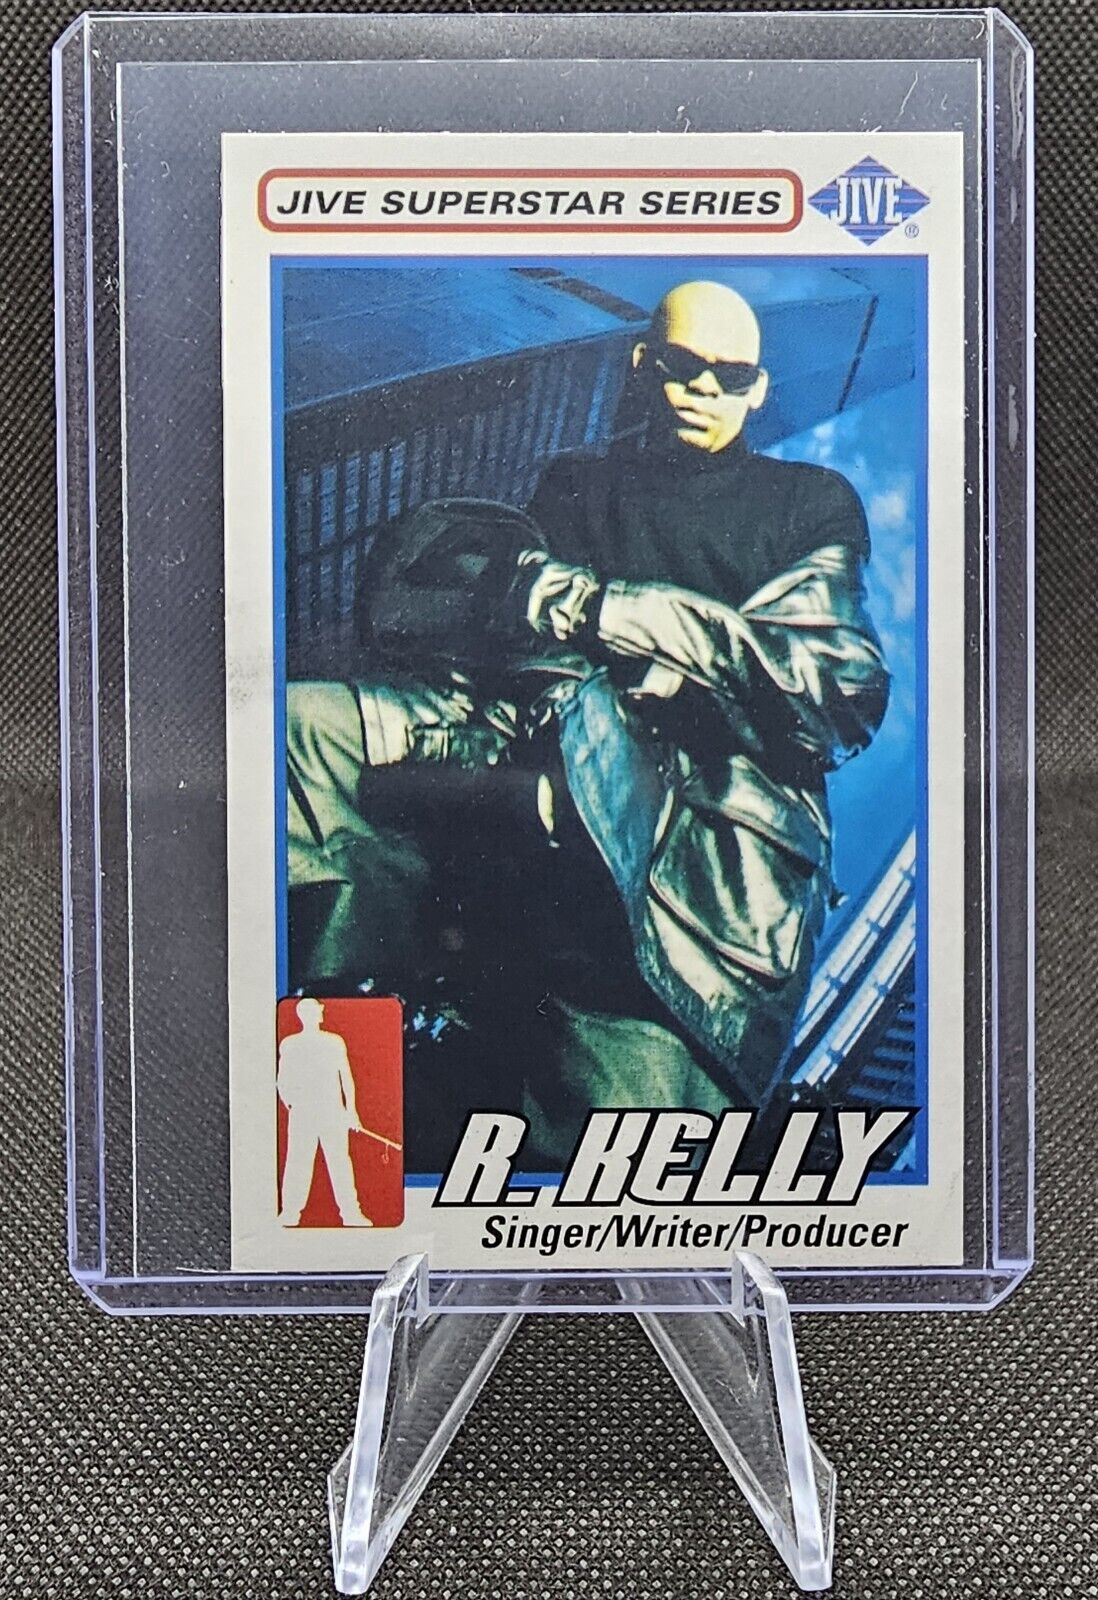 Vintage 1996 Jive Superstar Series R Kelly #1 Card Collectible Hip Hop R&B Music